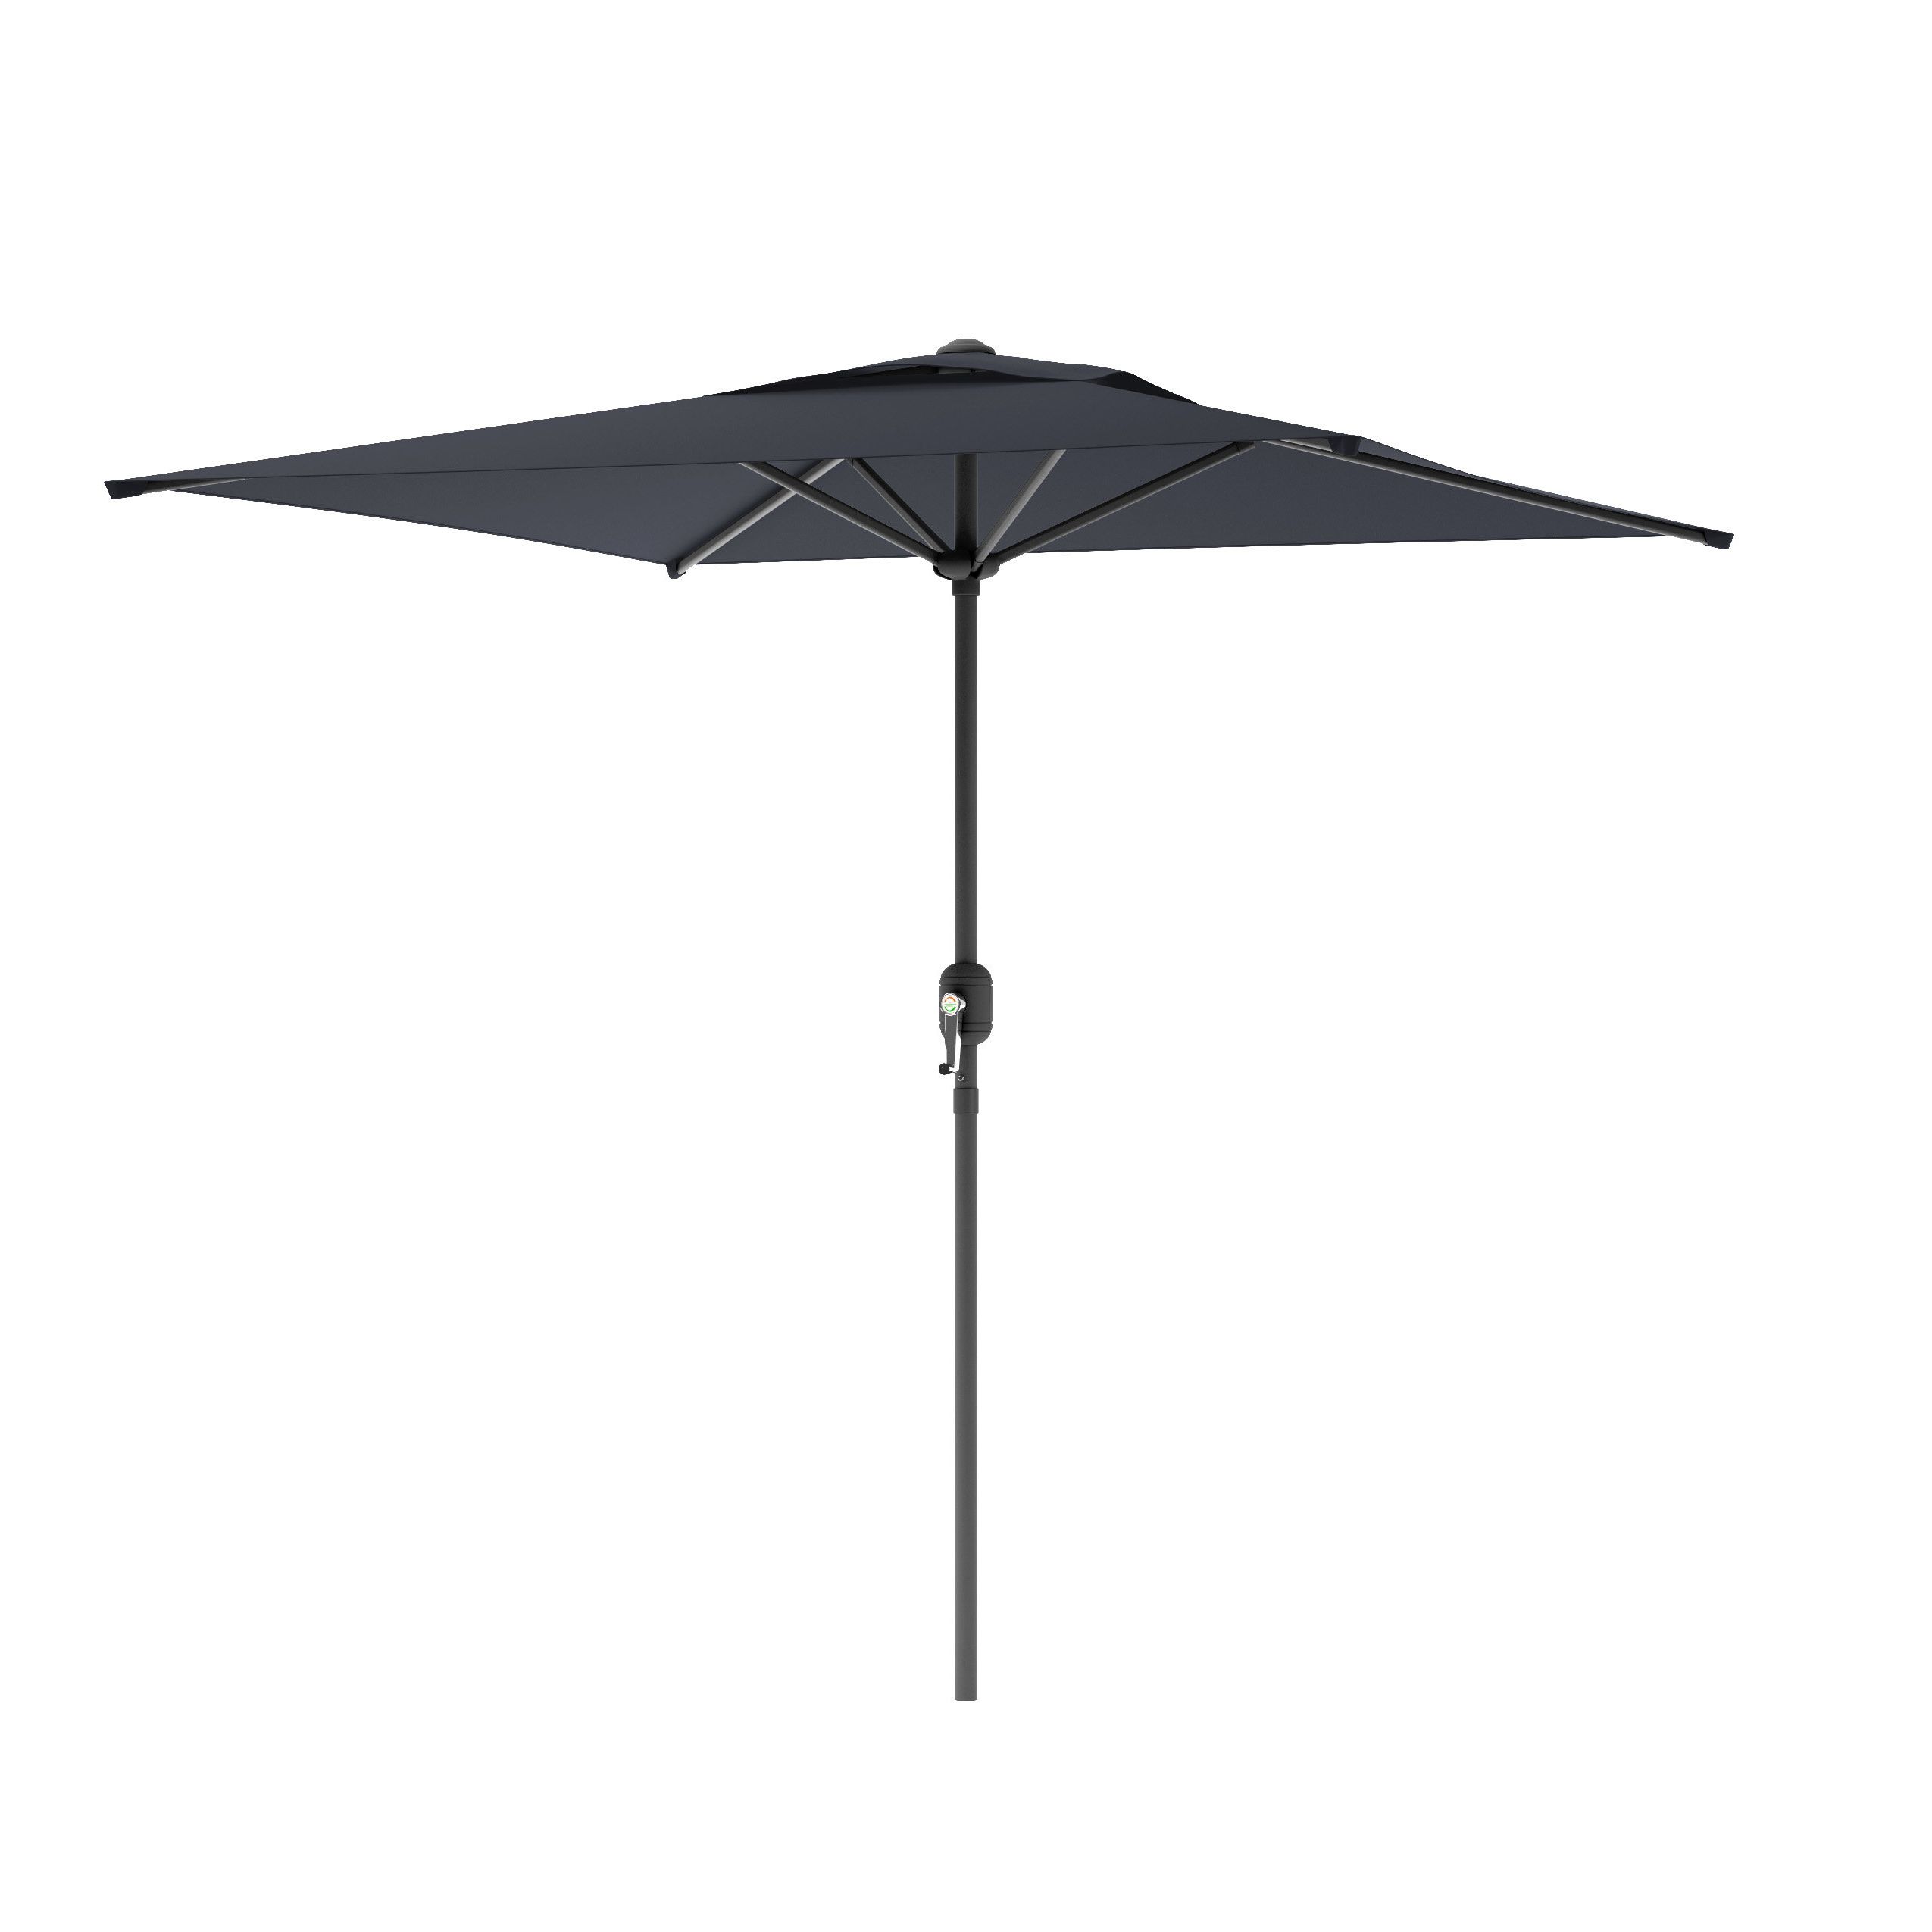 Cordelia Rectangular Market Umbrellas In Well Known Crowborough 9' Square Market Umbrella (View 12 of 20)